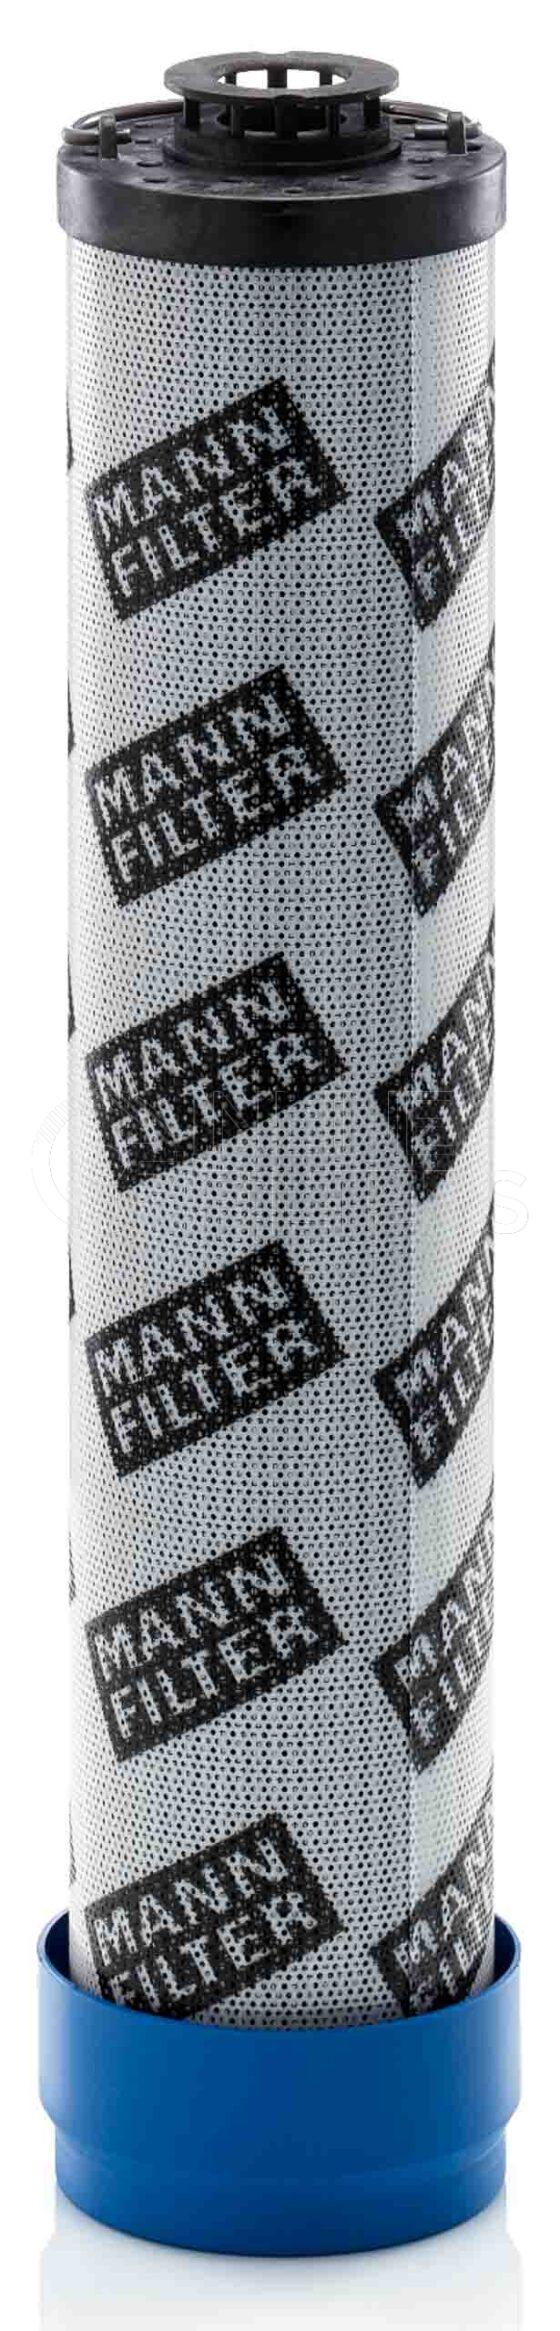 Mann H 10 002. Filter Type: Hydraulic.